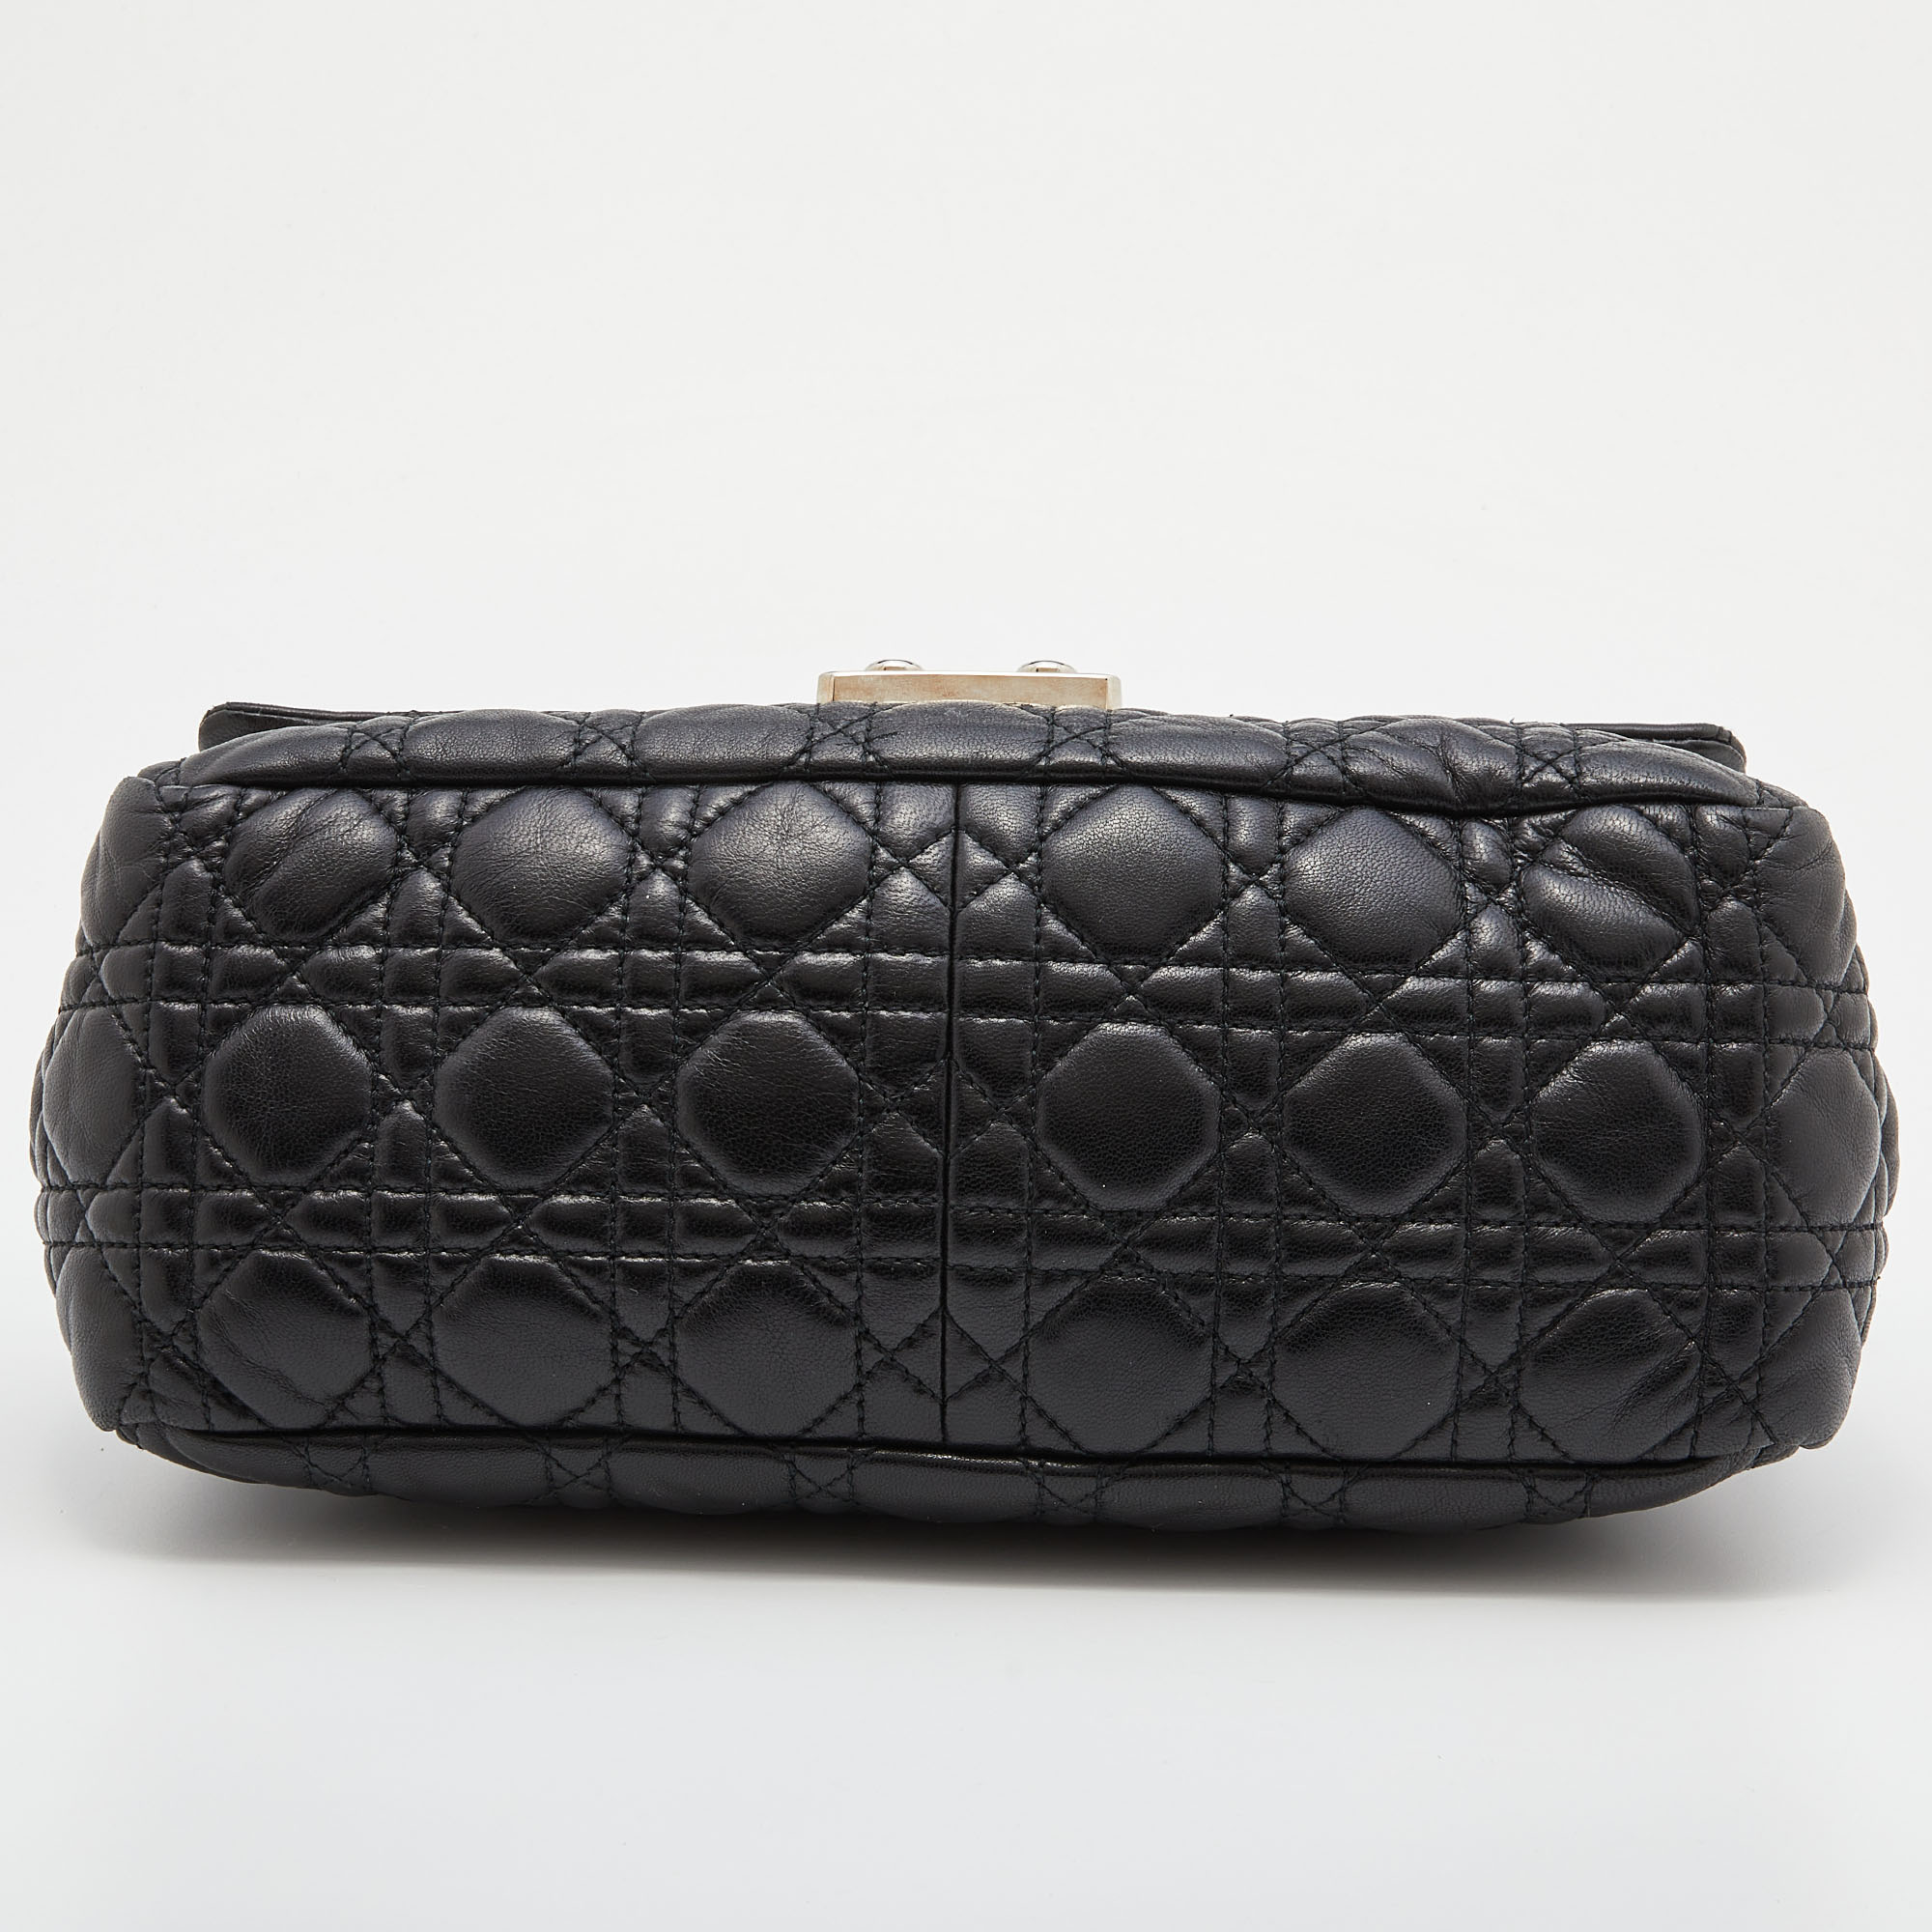 Dior Black Cannage Leather Miss Dior Flap Bag